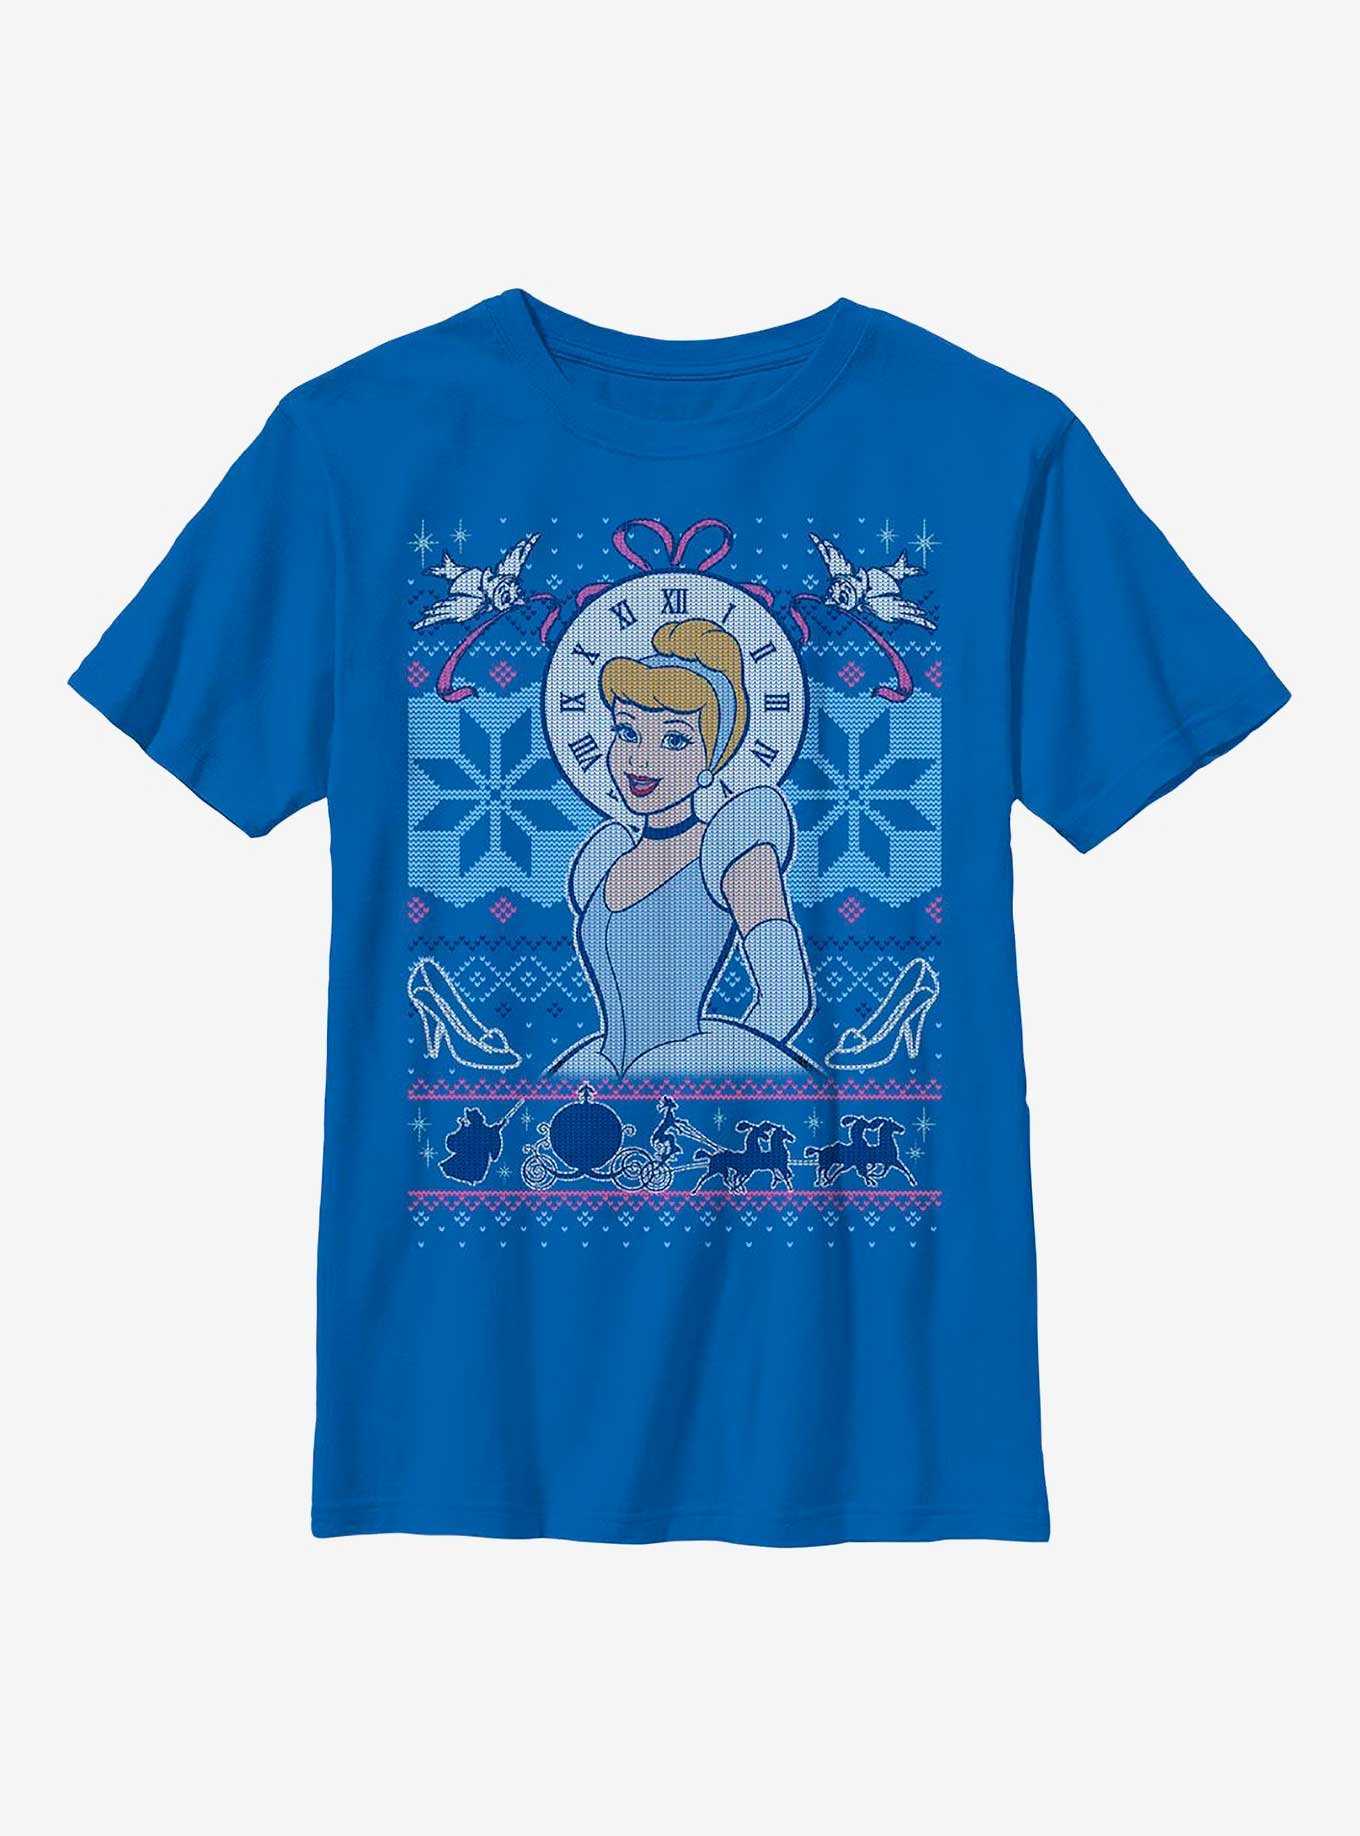 Disney Cinderella Ugly Sweater Pattern Youth T-Shirt, , hi-res